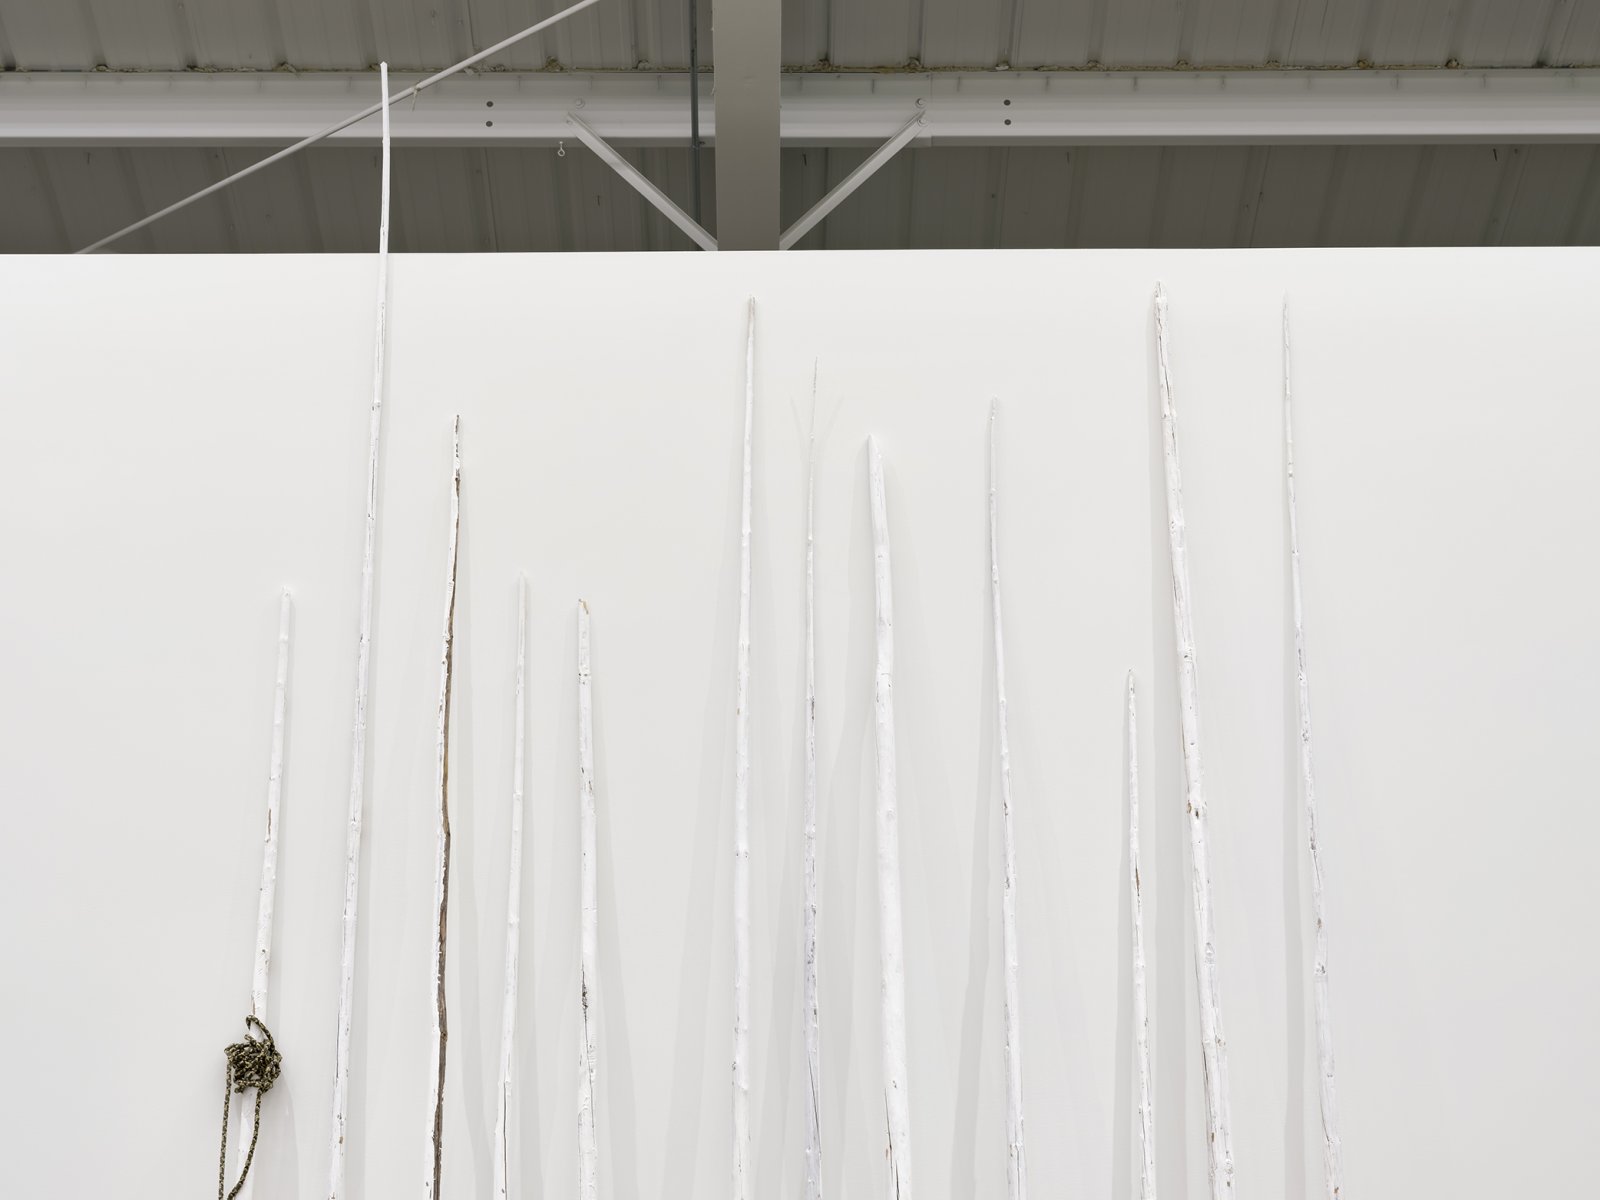 Duane Linklater, action at a distance (detail), 2020, teepee poles, paint, nylon rope, plants, plates, ceramics, sandbags, frames, 12 digital prints, mirror, 233 x 102 x 66 in. (592 x 259 x 168 cm)